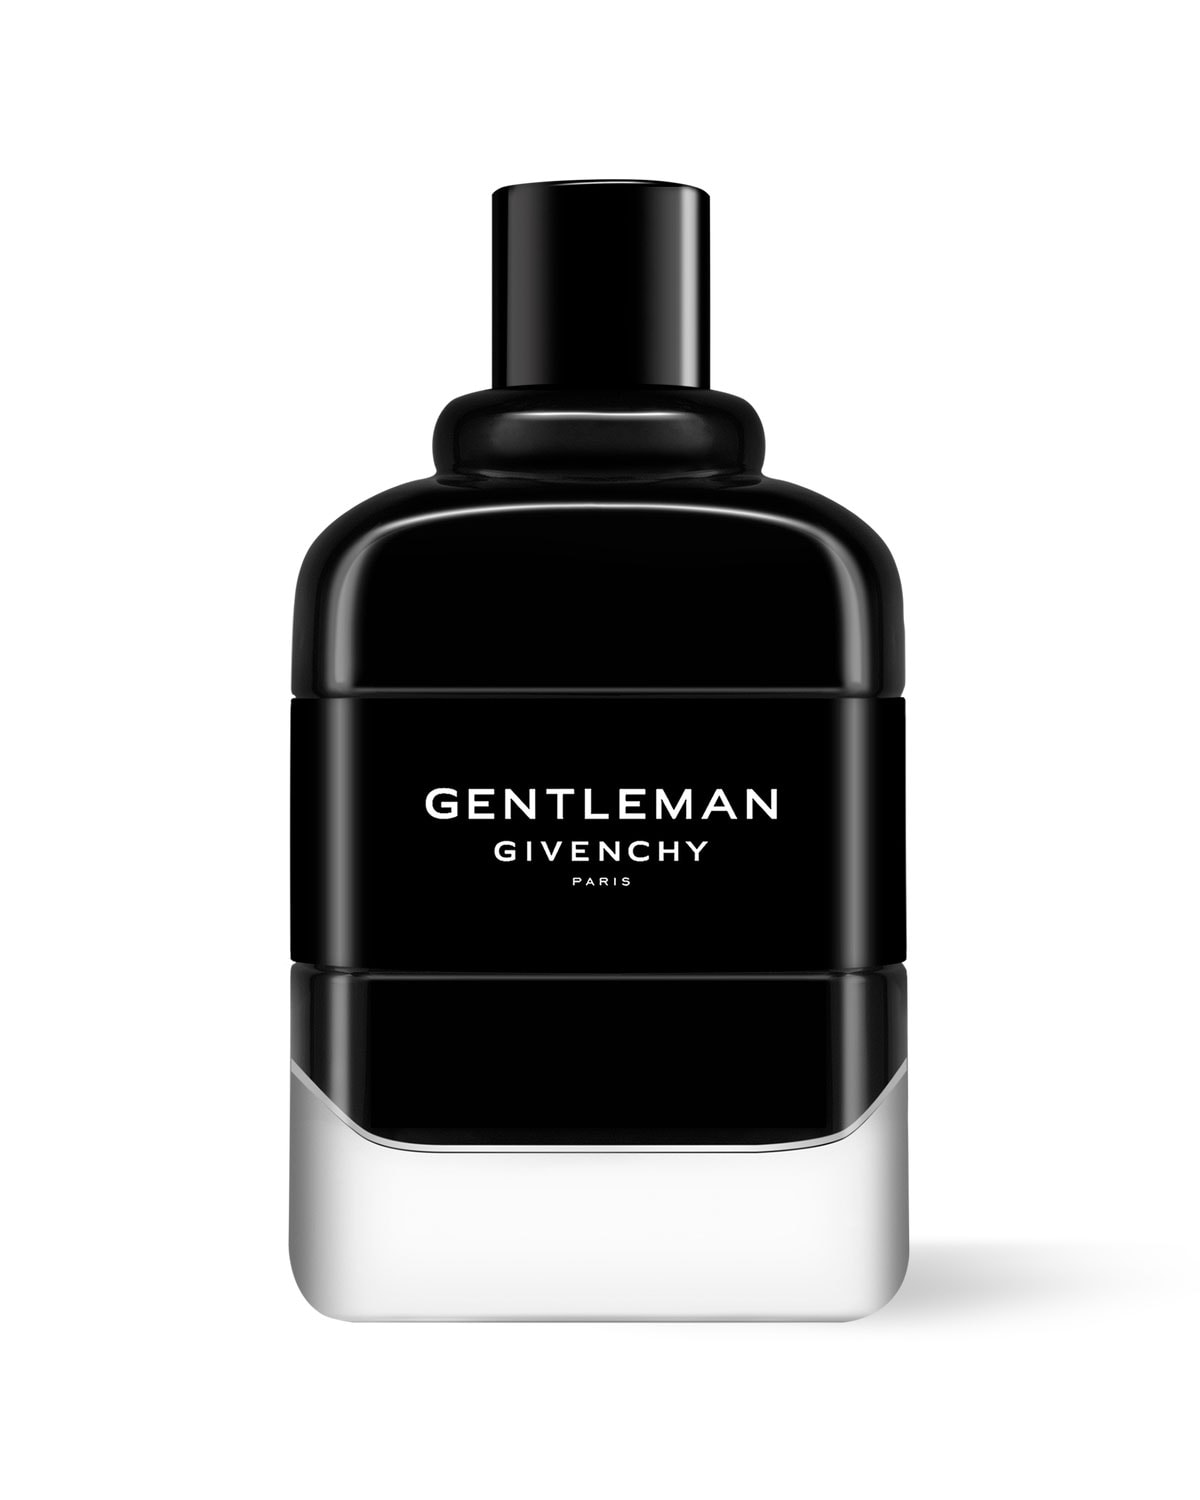 Gentleman Givenchy EDP Giftset » Givenchy » The Parfumerie » Sri Lanka